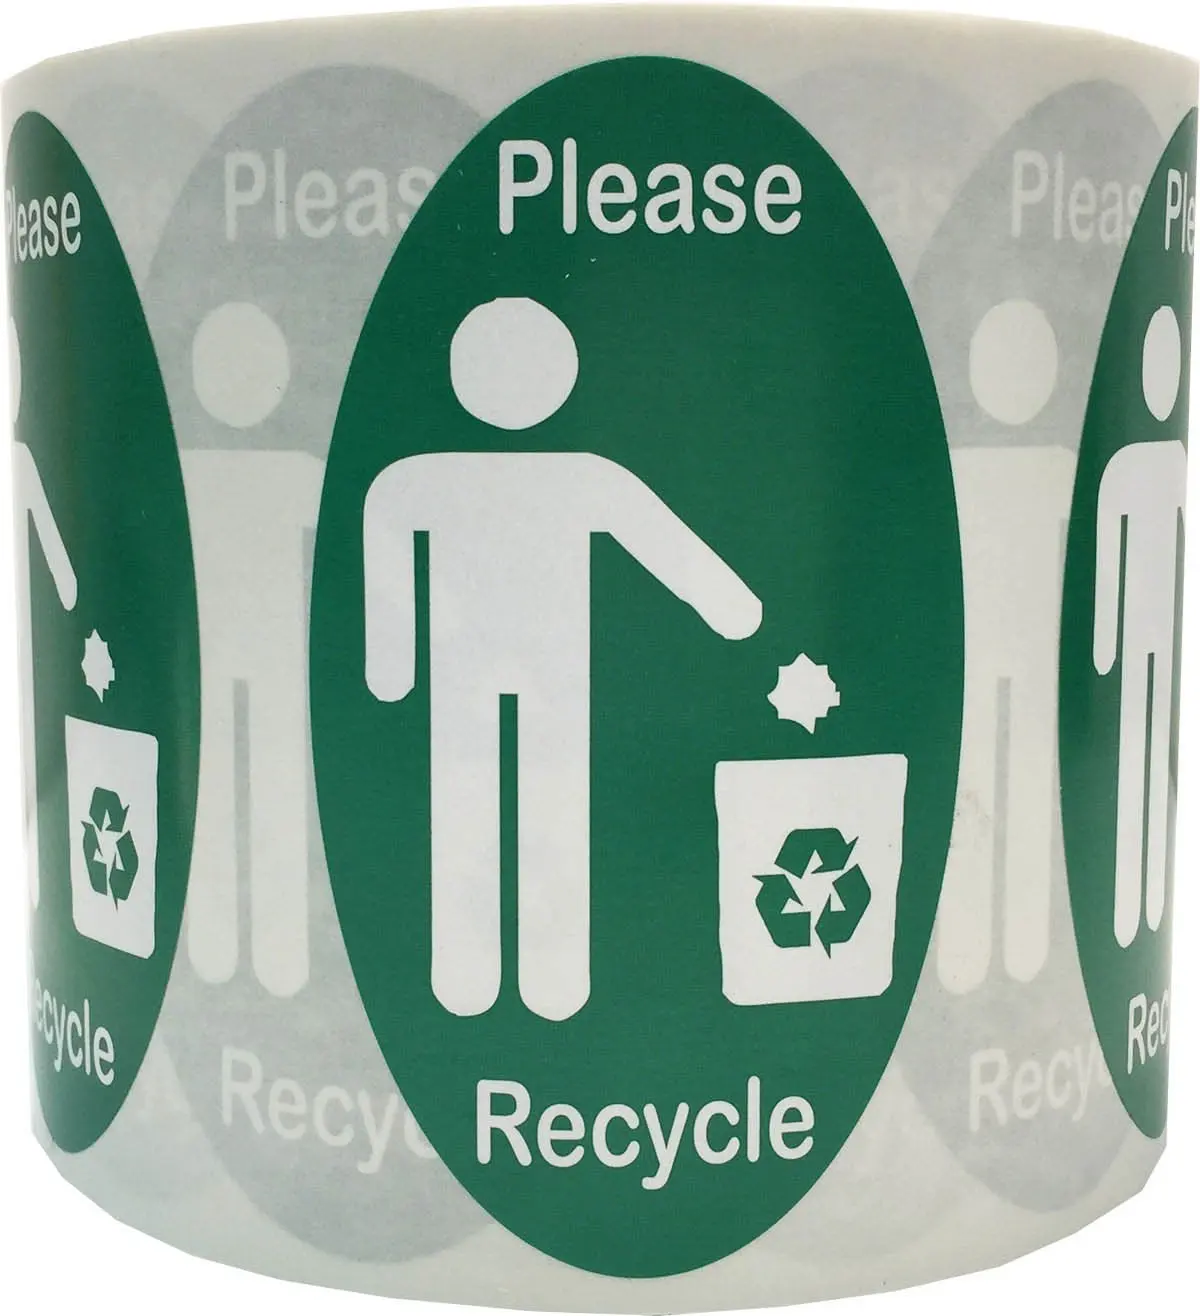 We can recycle. Футболка с принтом recycle. Recycle перевод. Recycle can Print.